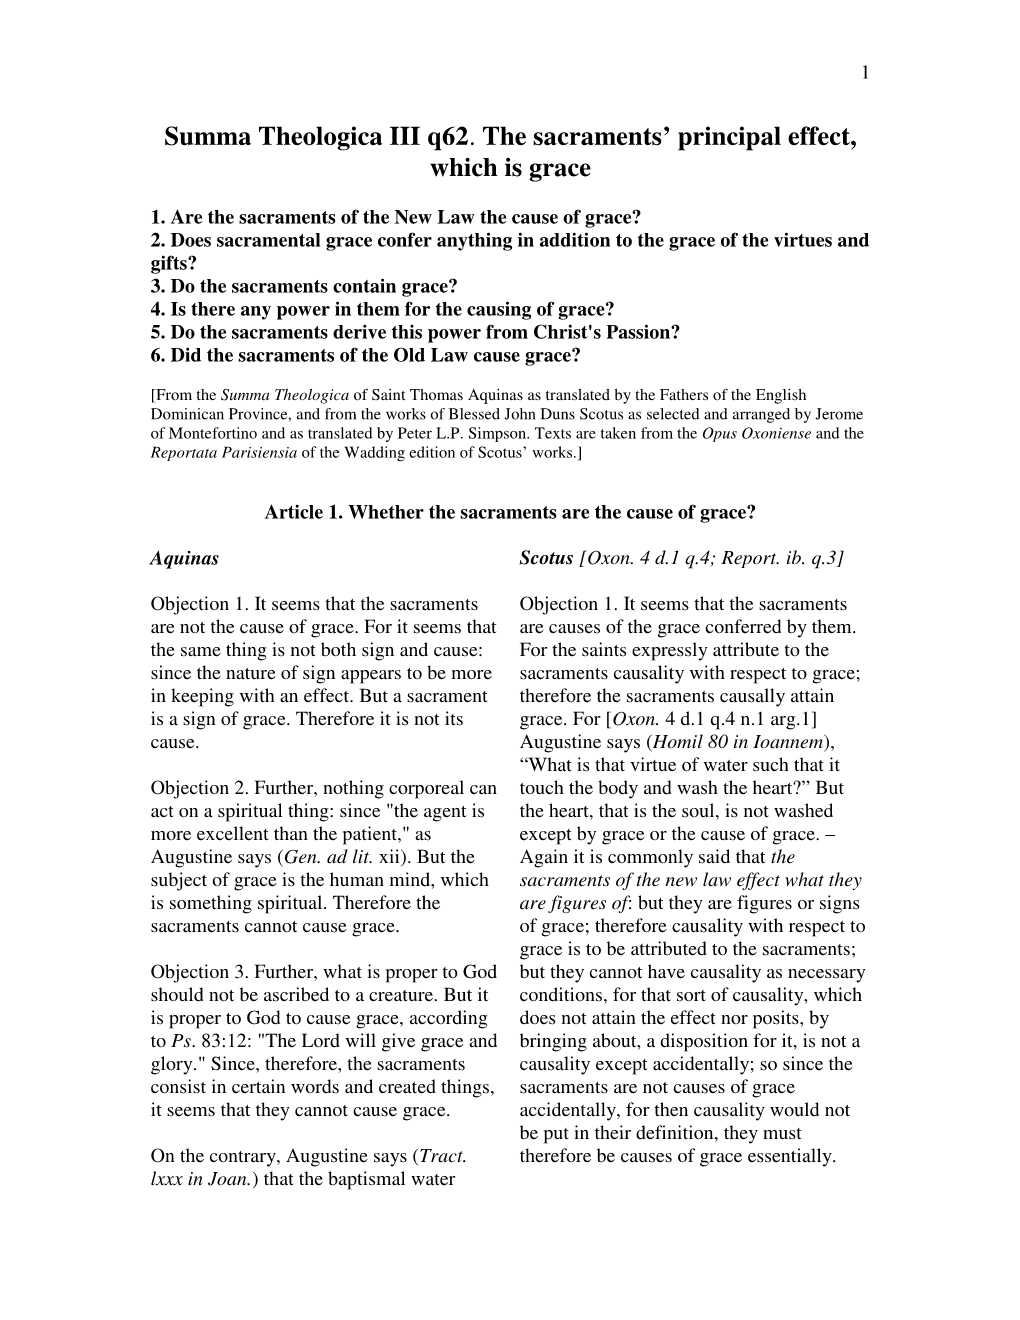 Summa Theologica III Q62. the Sacraments' Principal Effect, Which